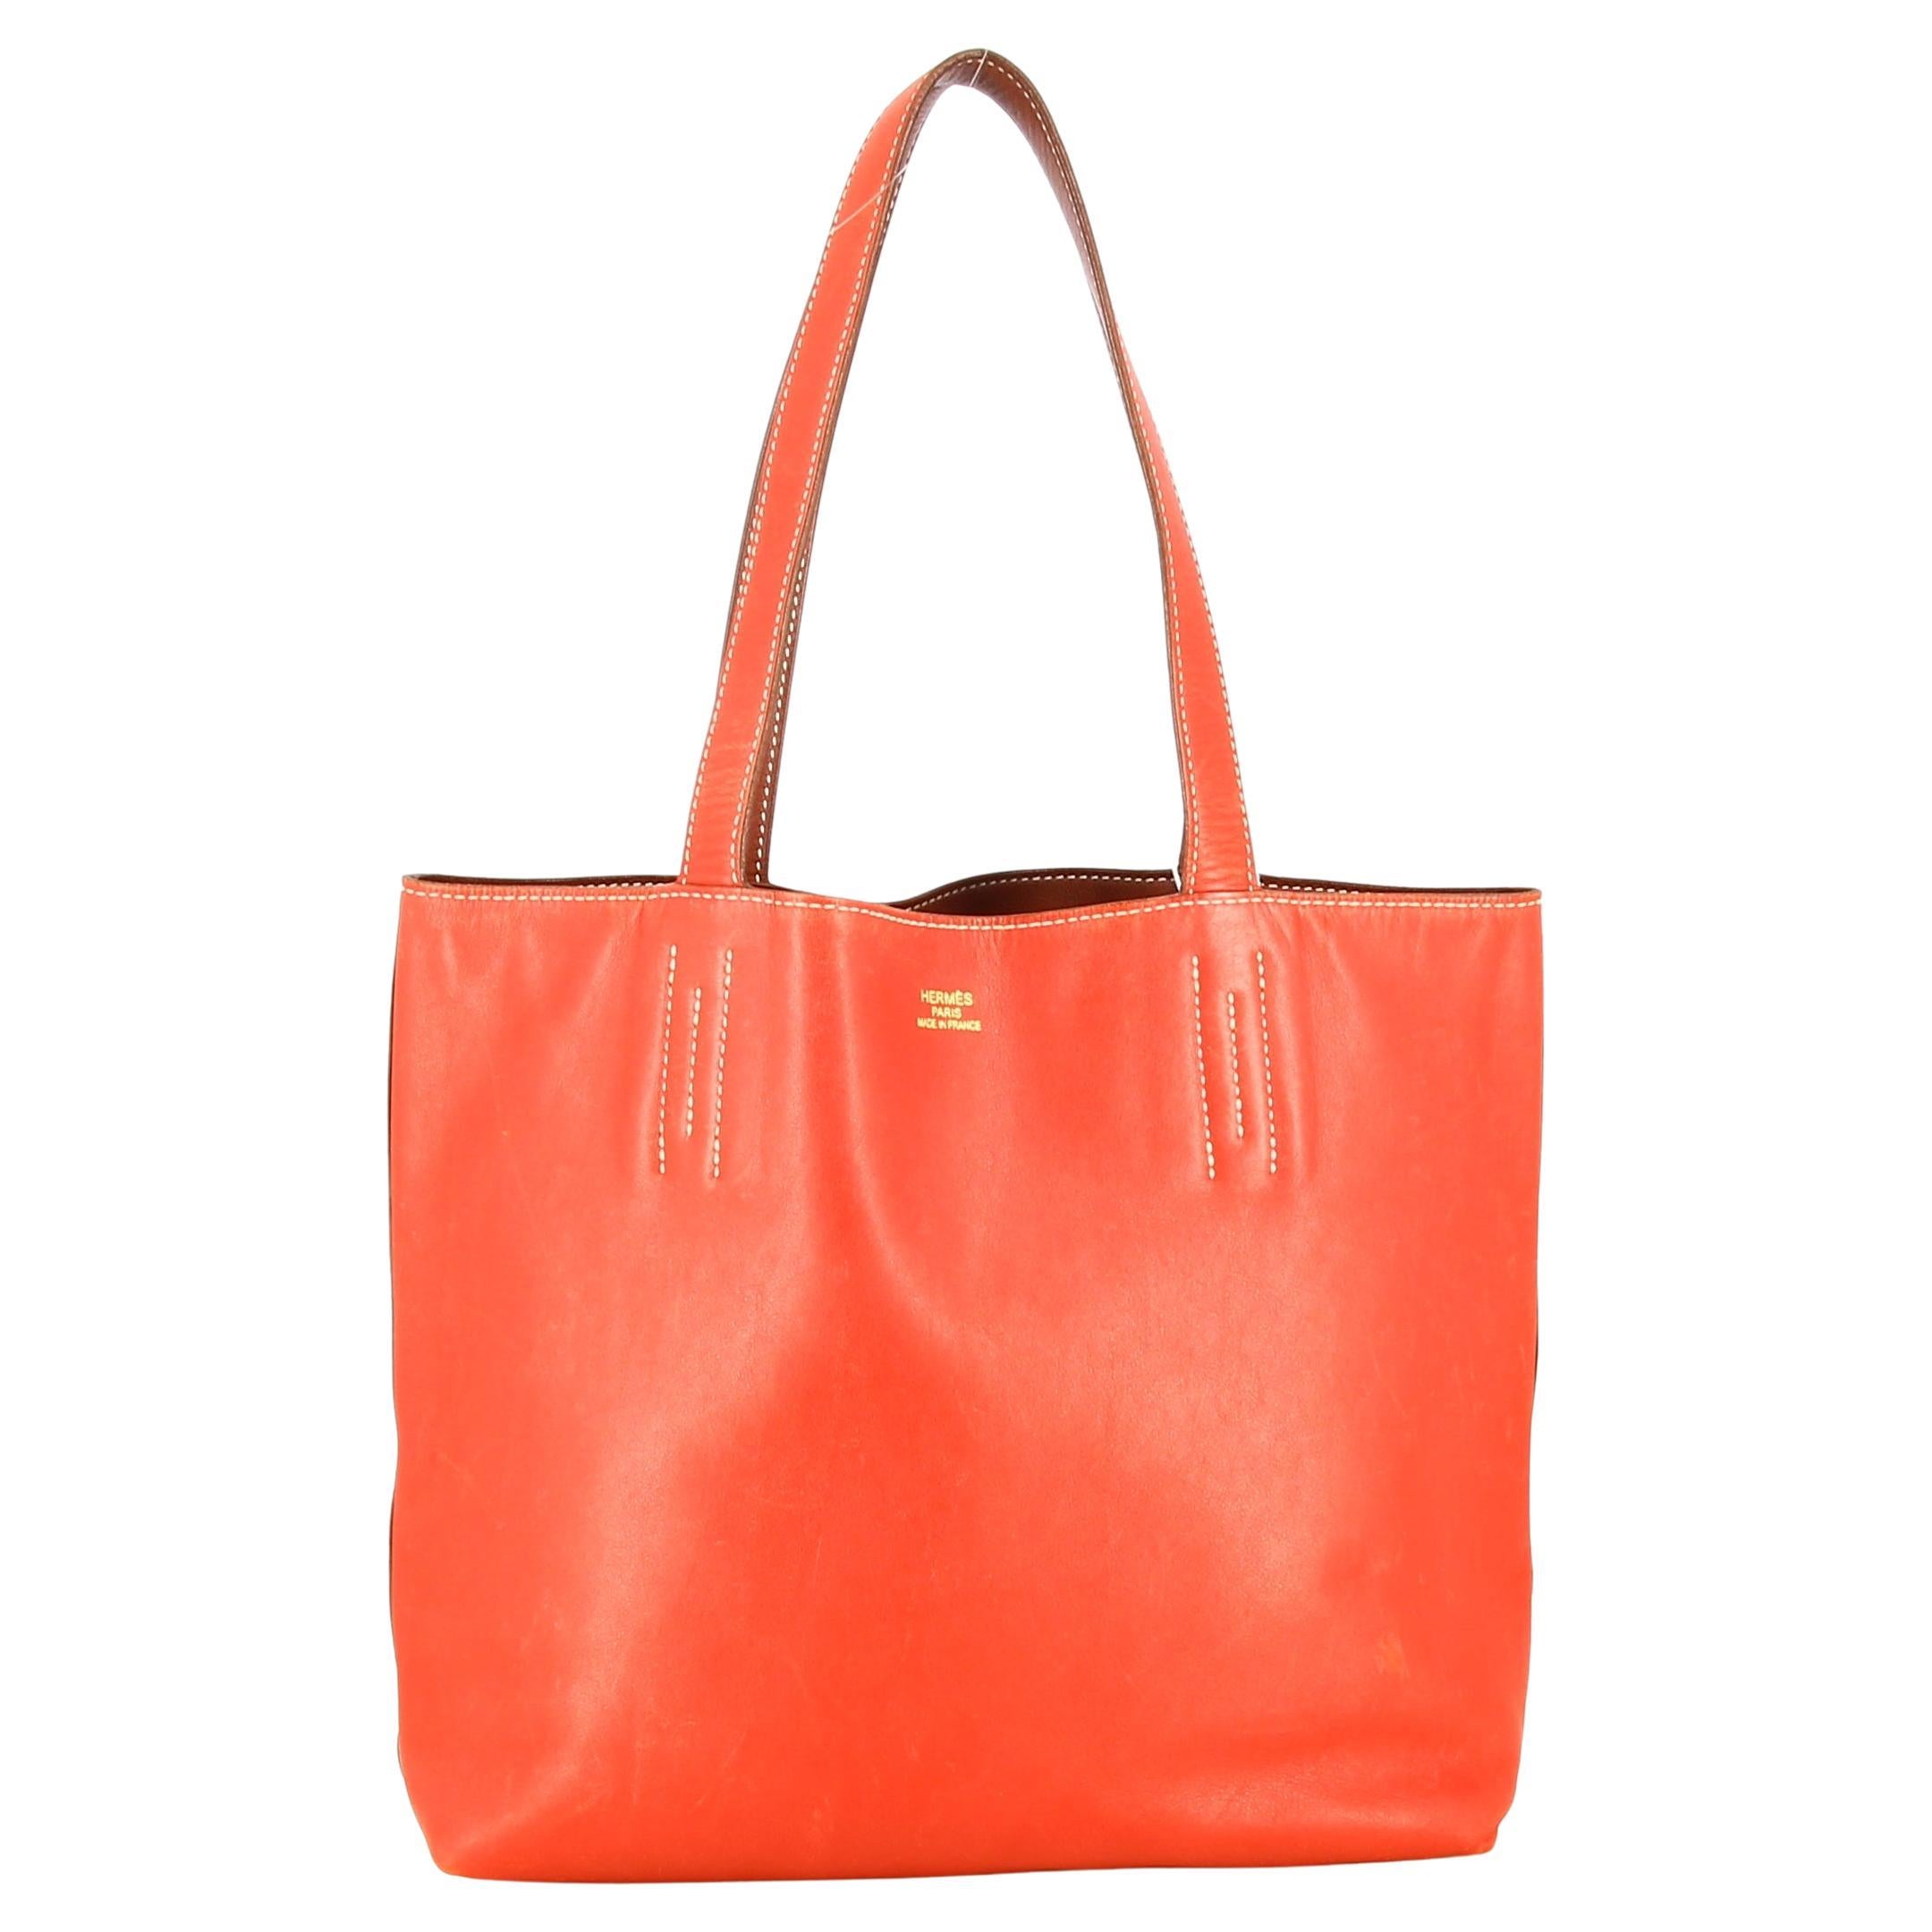 2003 Hermès Red Leather Handbag   Double sens